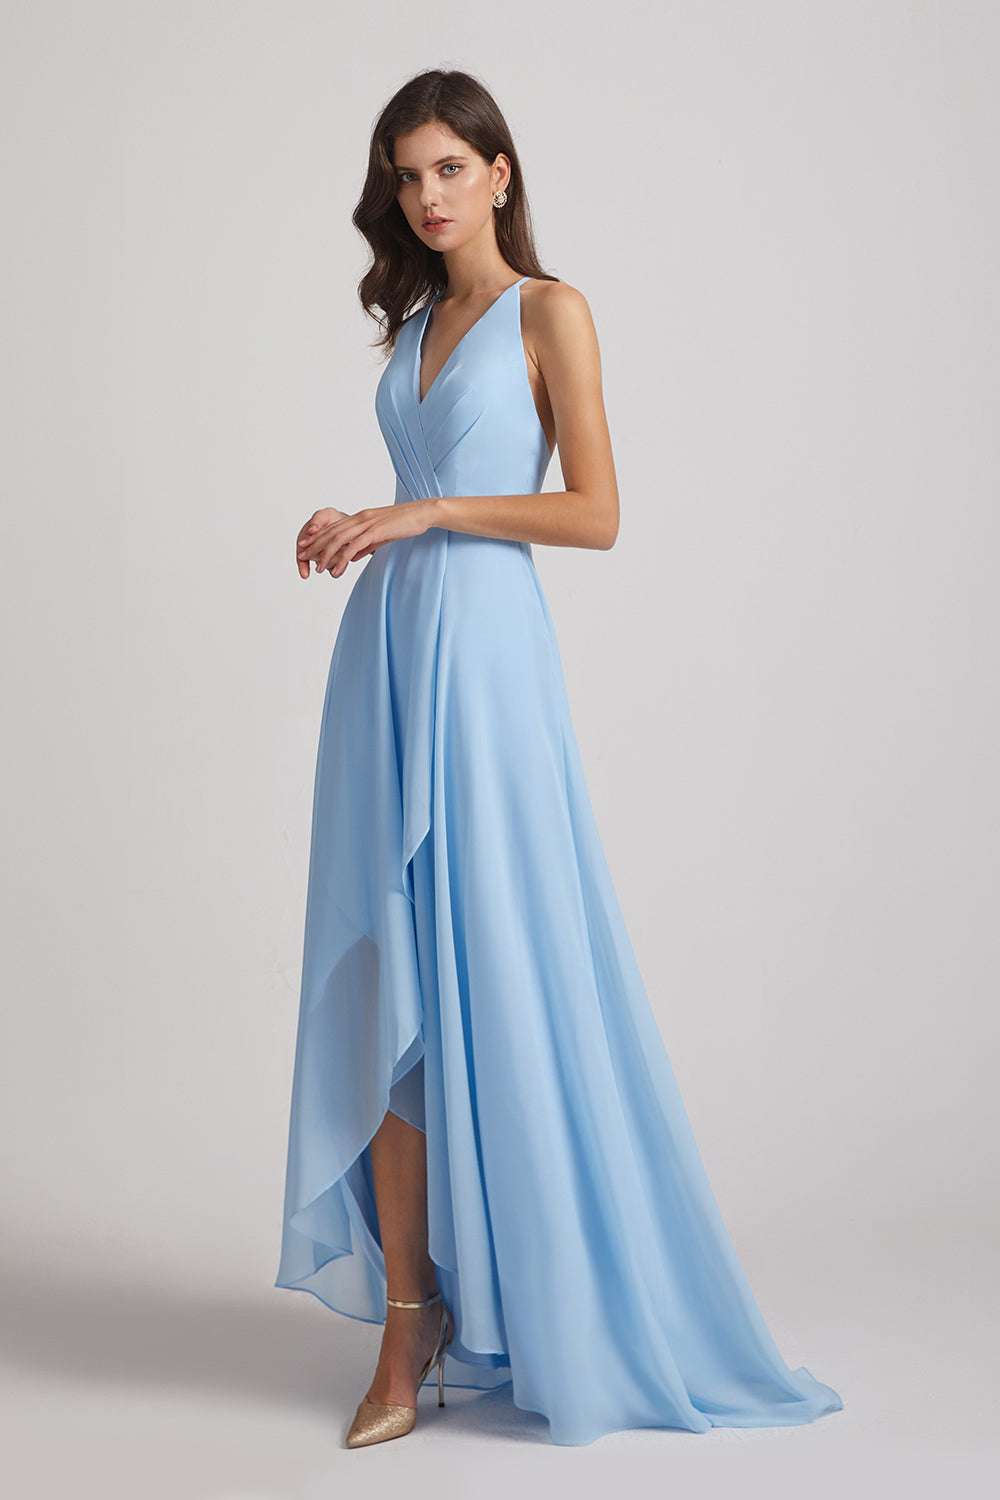 sky blue chiffon high low bridesmaid dresses